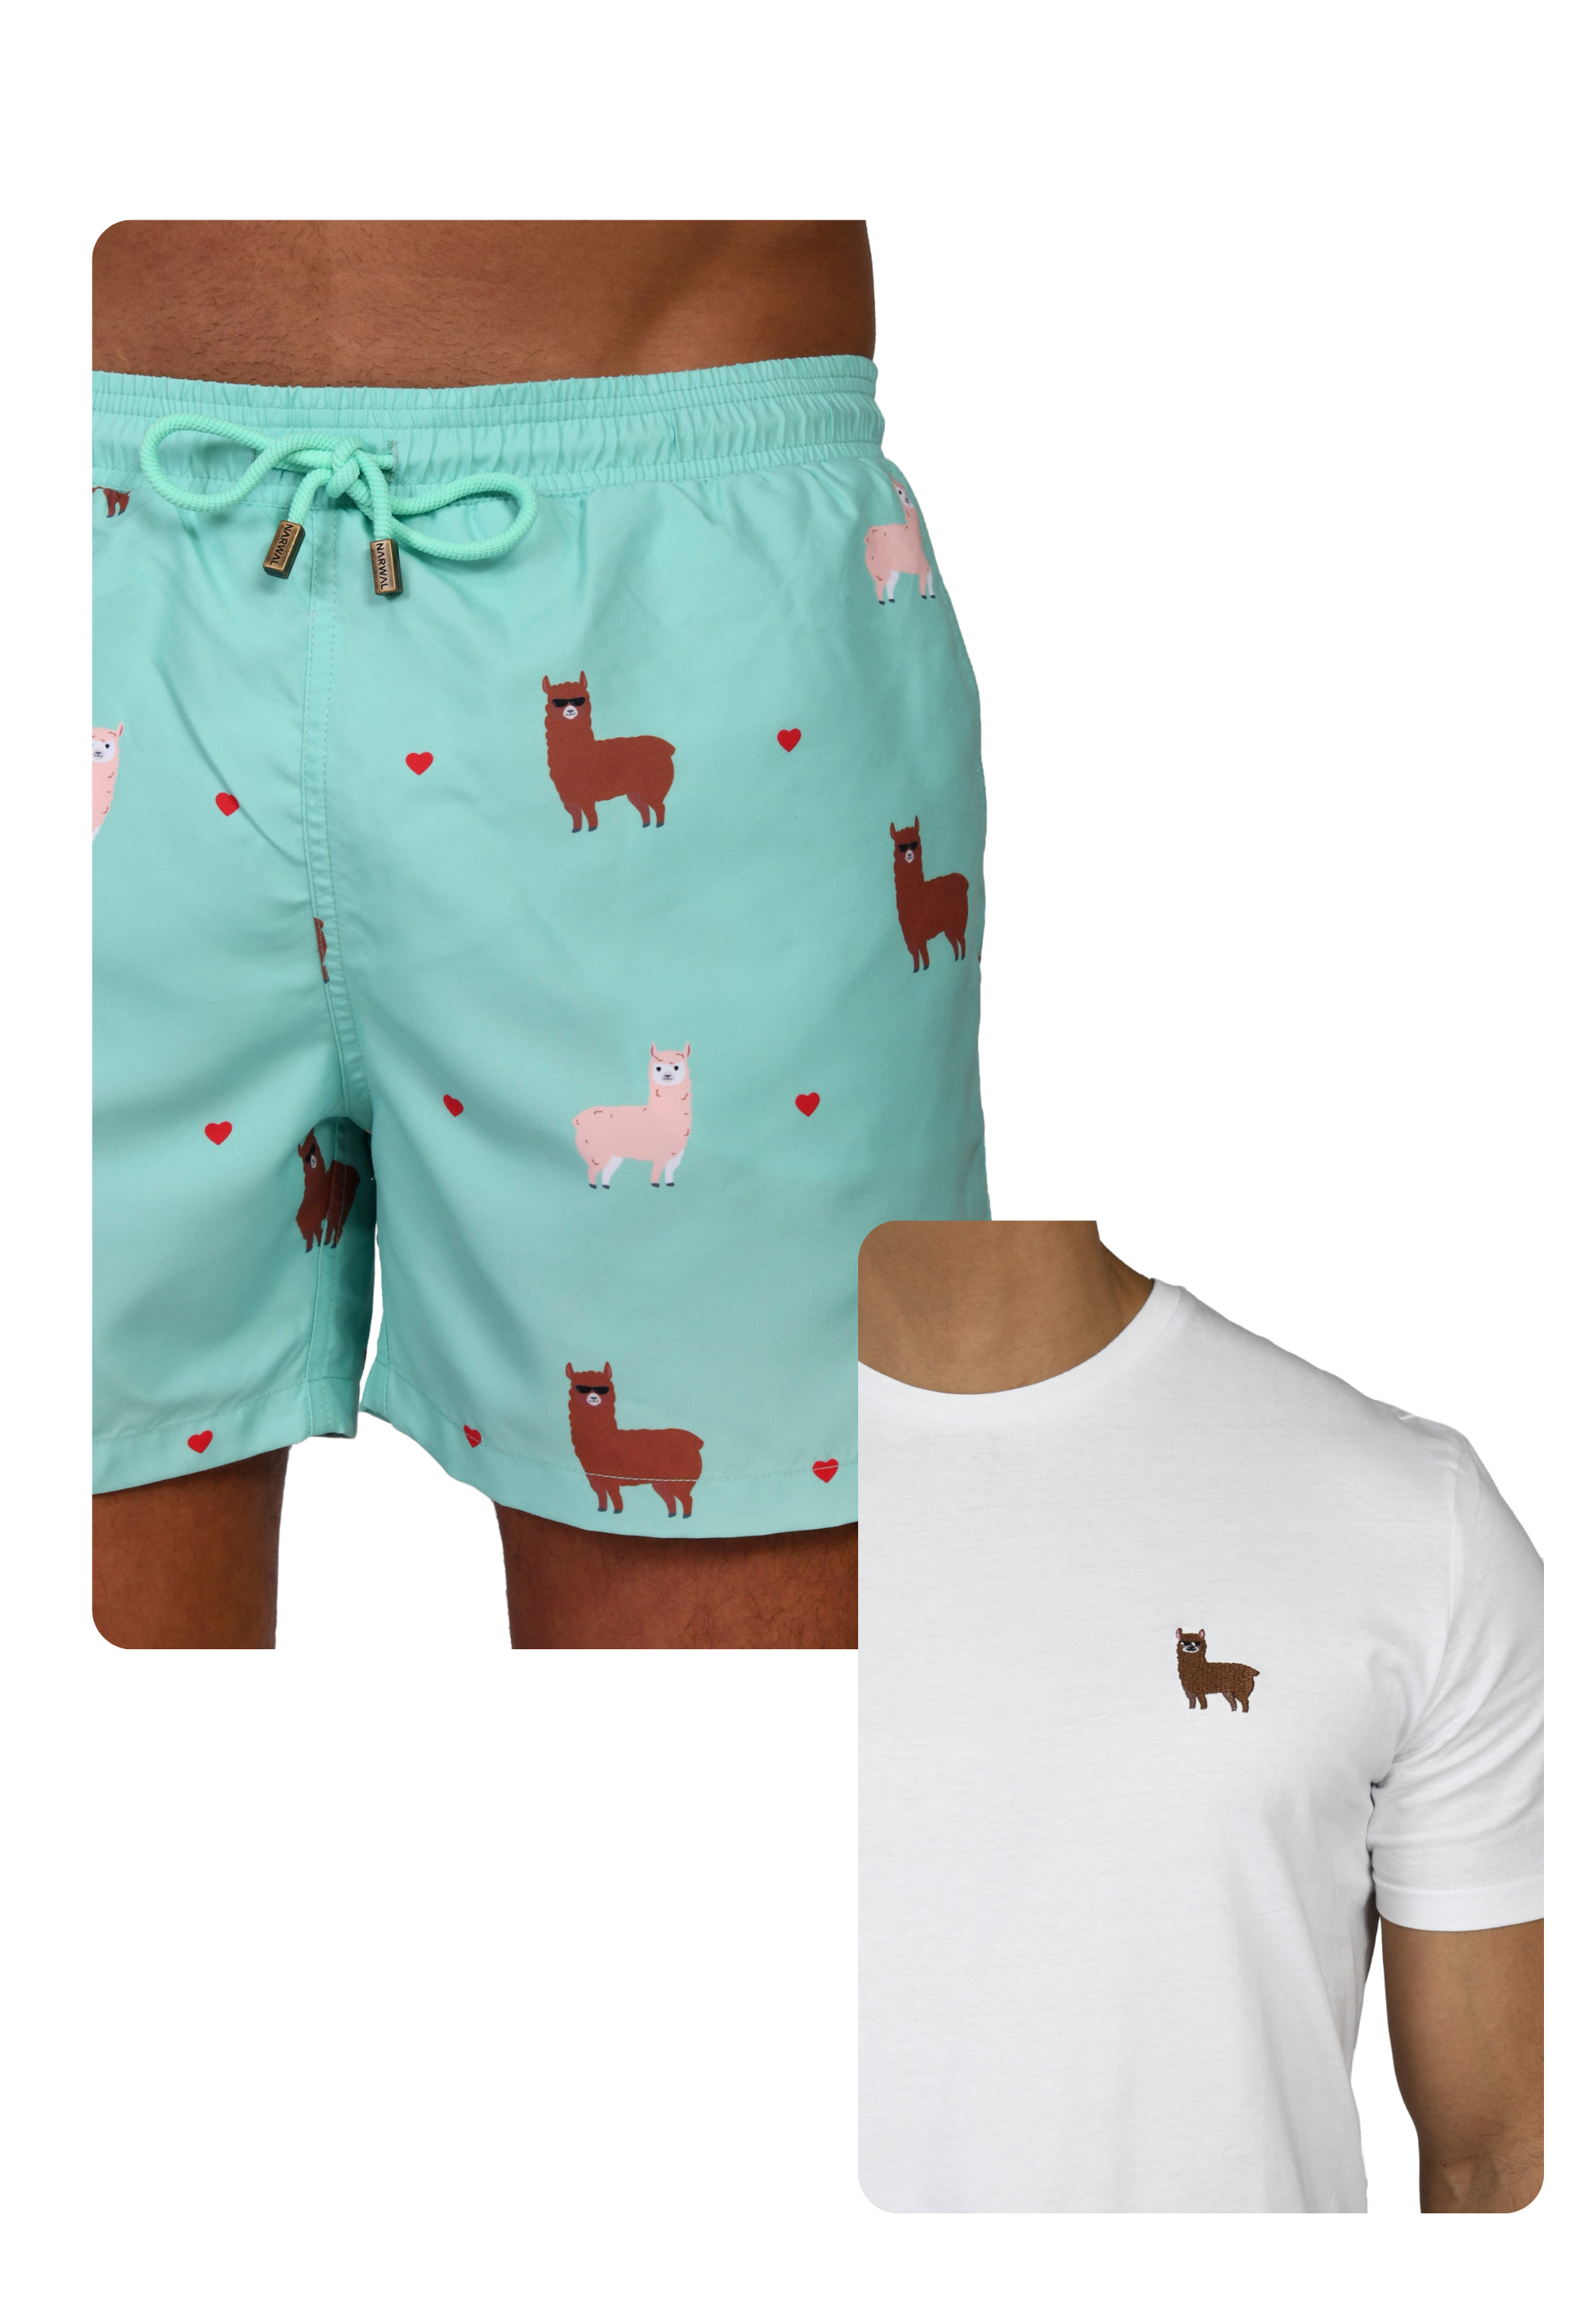 Alpaca Swim Trunks & T-shirt Bundle